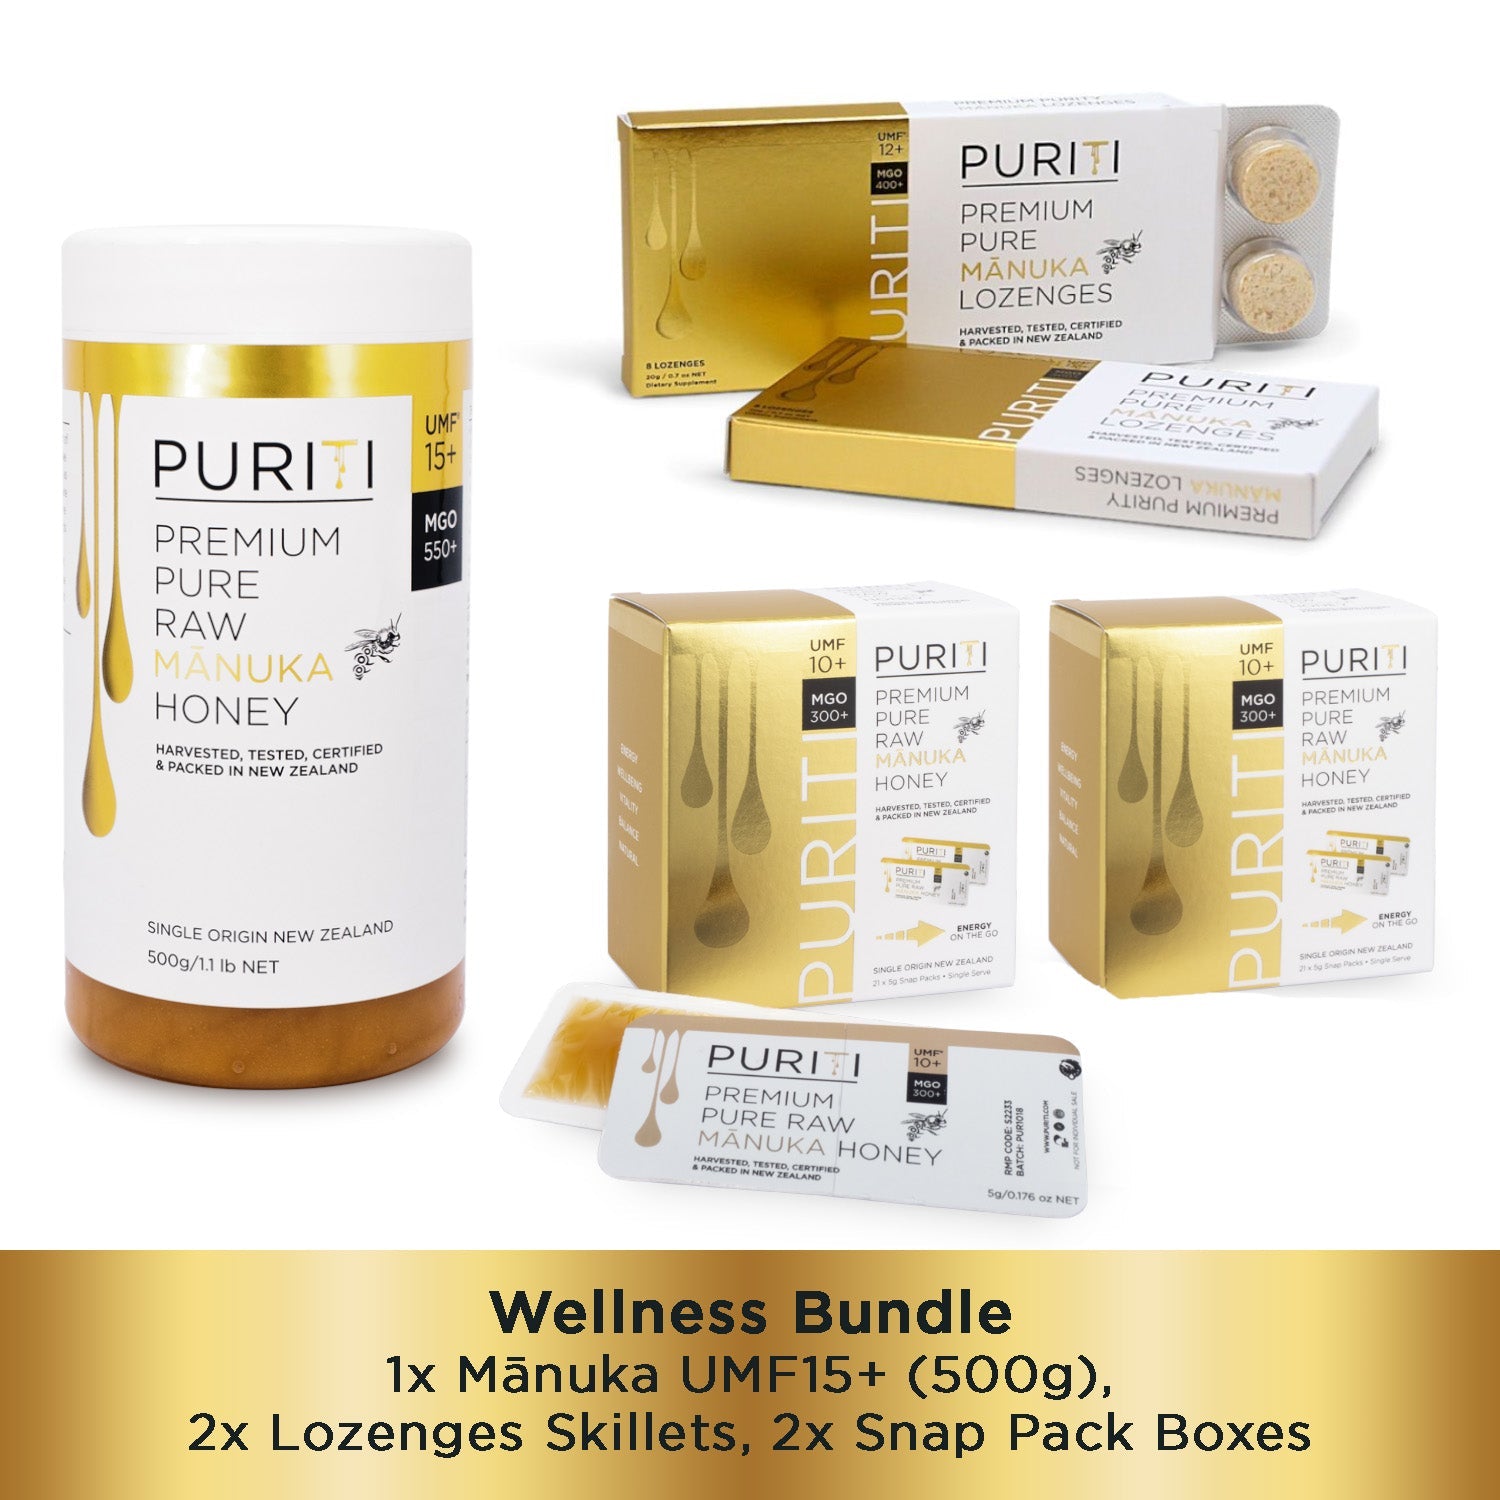 Puriti Manuka Wellness Bundle Discount Genuine Manuka Honey UMF 15+ Jar Manuka Lozenges and Snap Packs